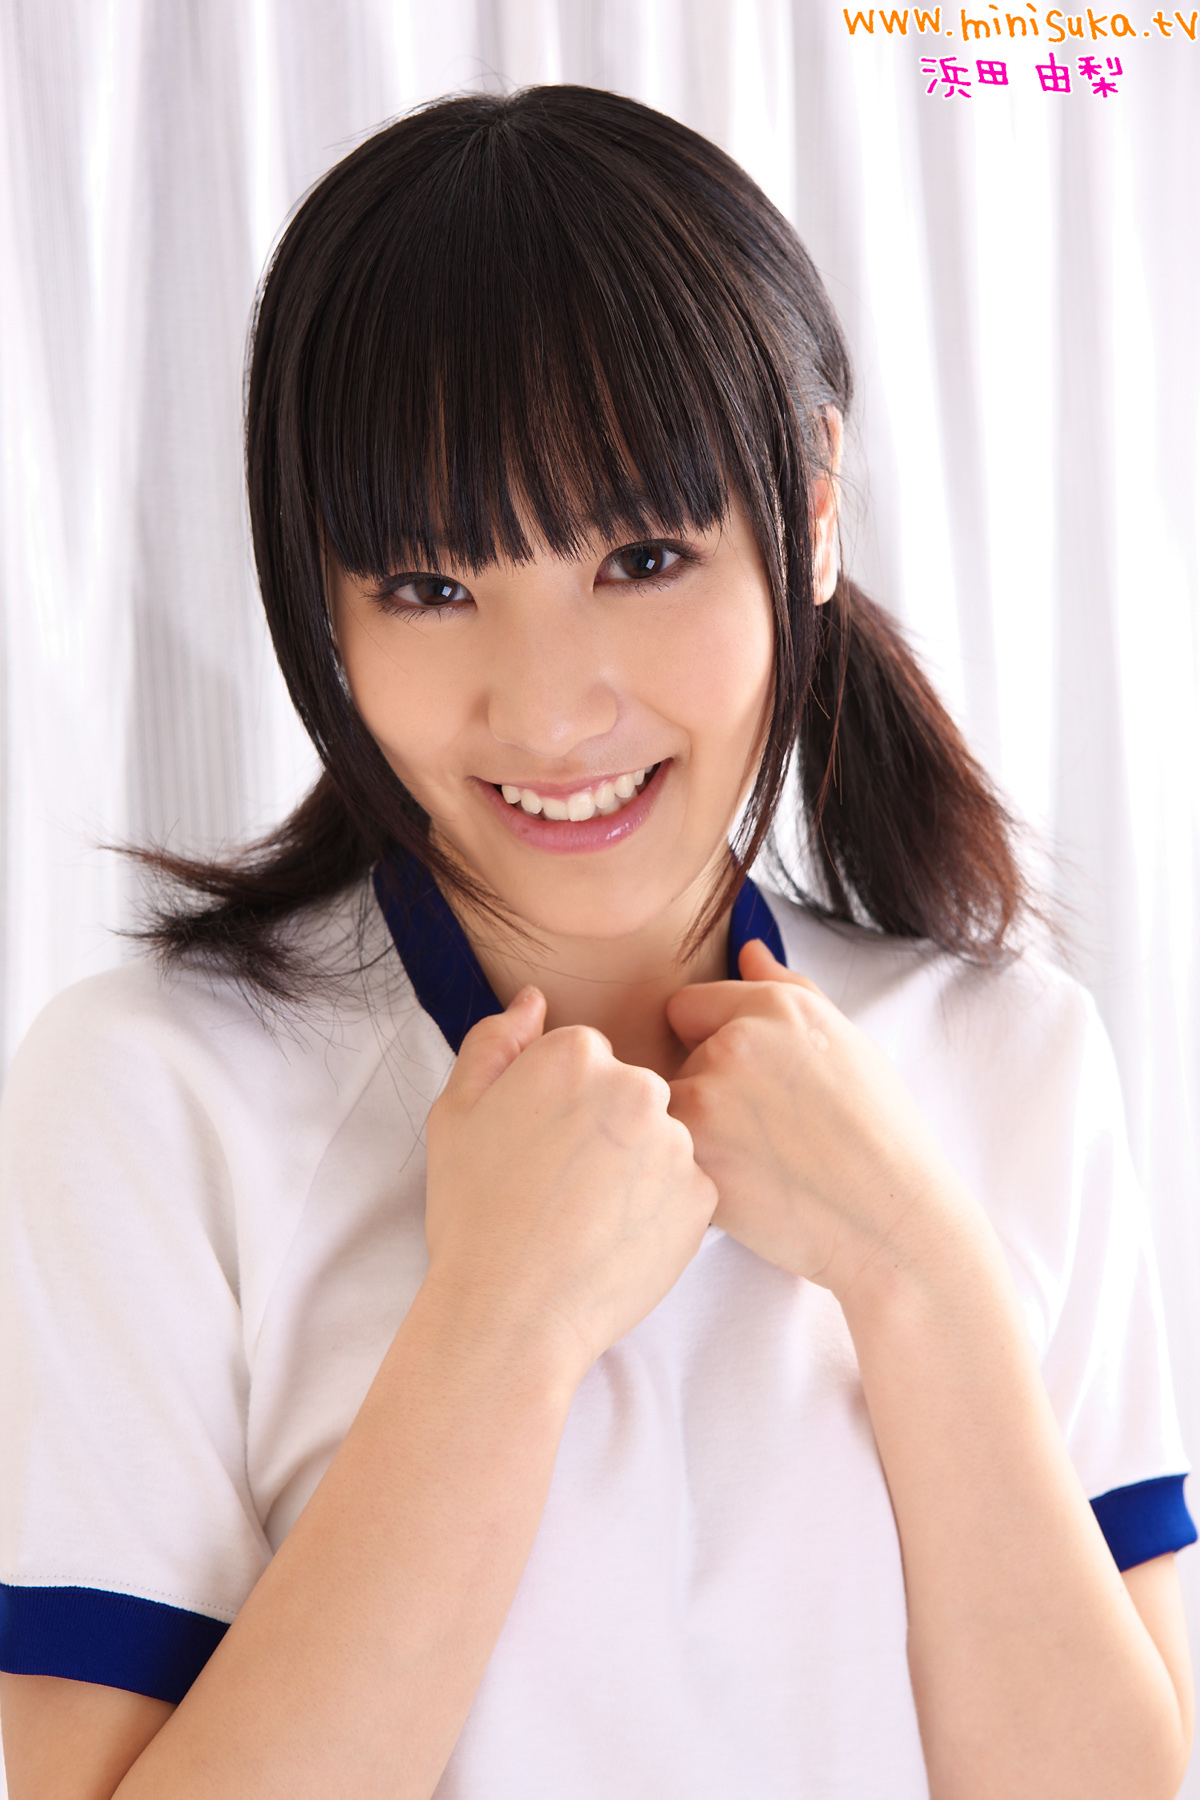 Hamada Yuri Japanese AV Actress[ Minisuka.tv ]Yuri Hamada, female high school student in active service